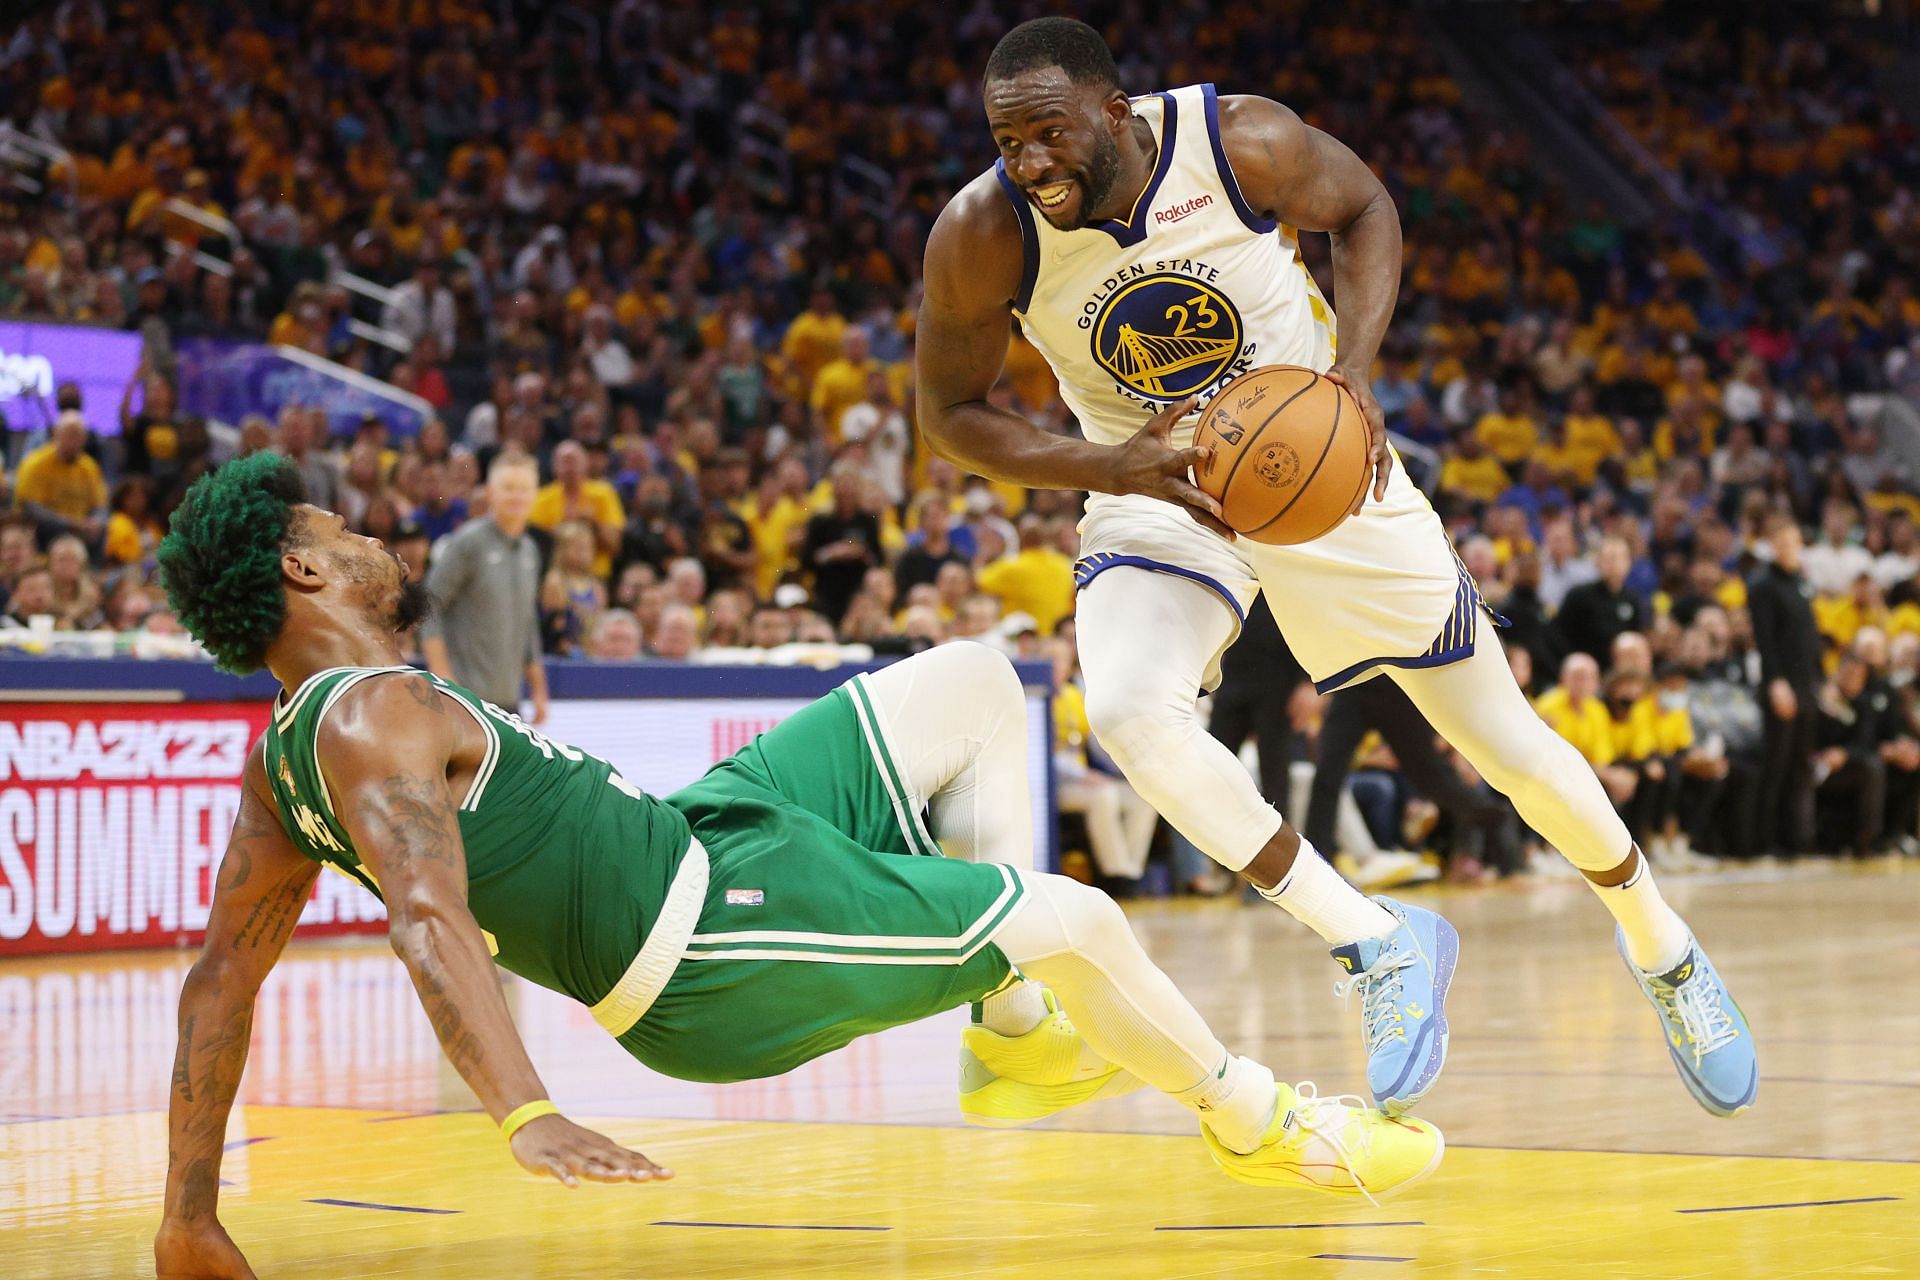 The Boston Celtics will host the Golden State Warriors for Game 3